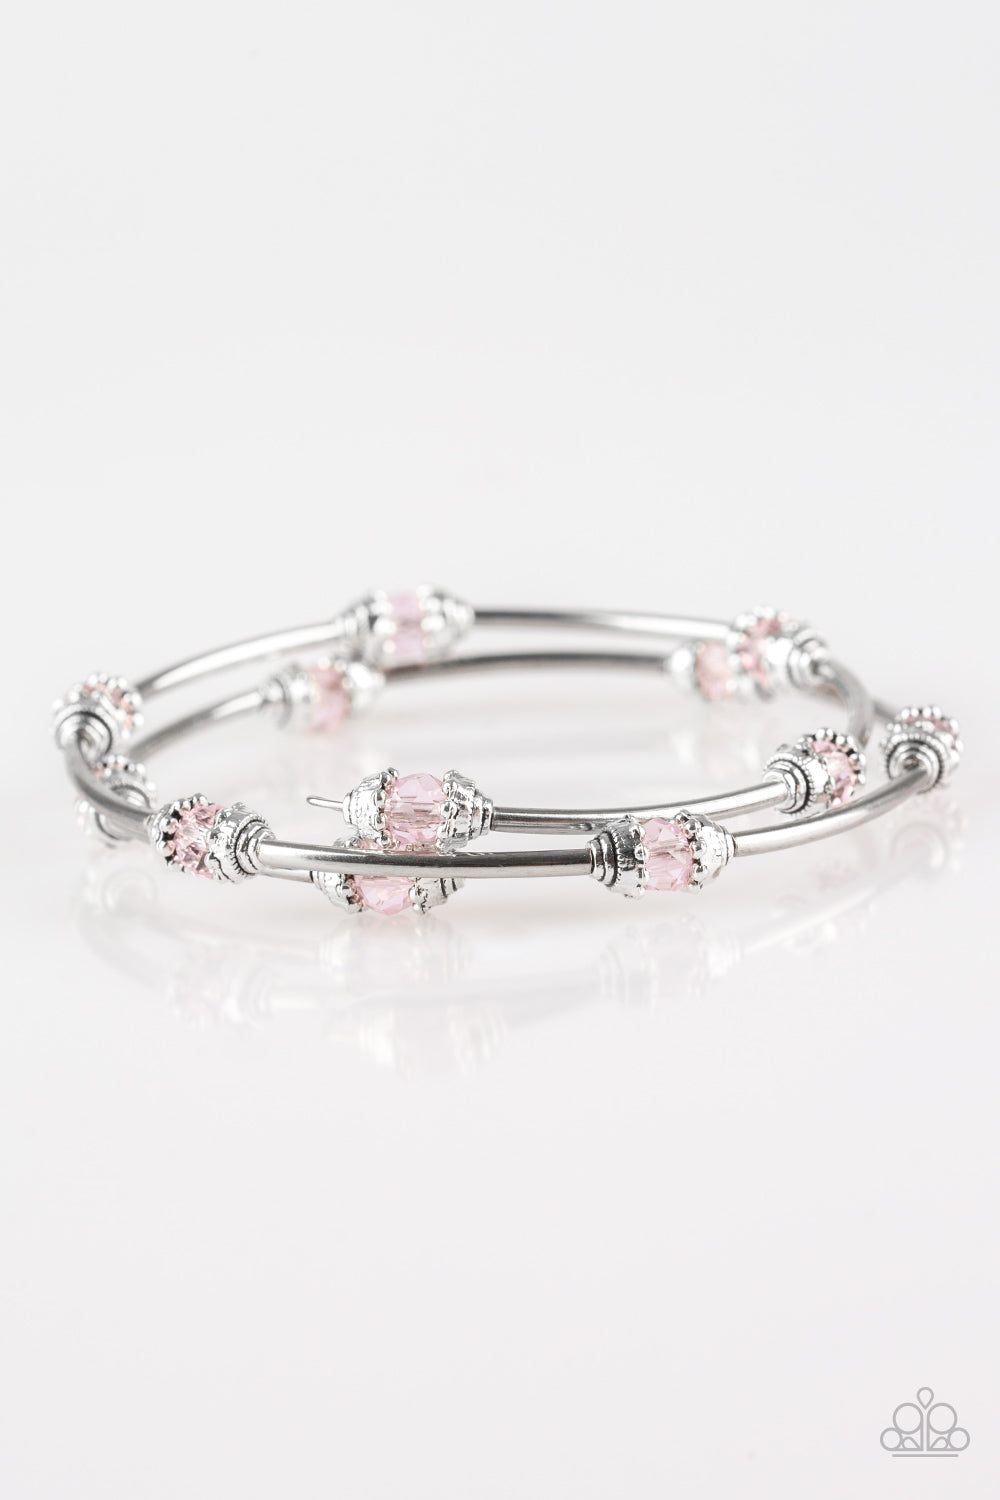 pittmanbling-and-jewelry-inc-presentsinto-infinity-pink-bracelet-paparazzi-accessories